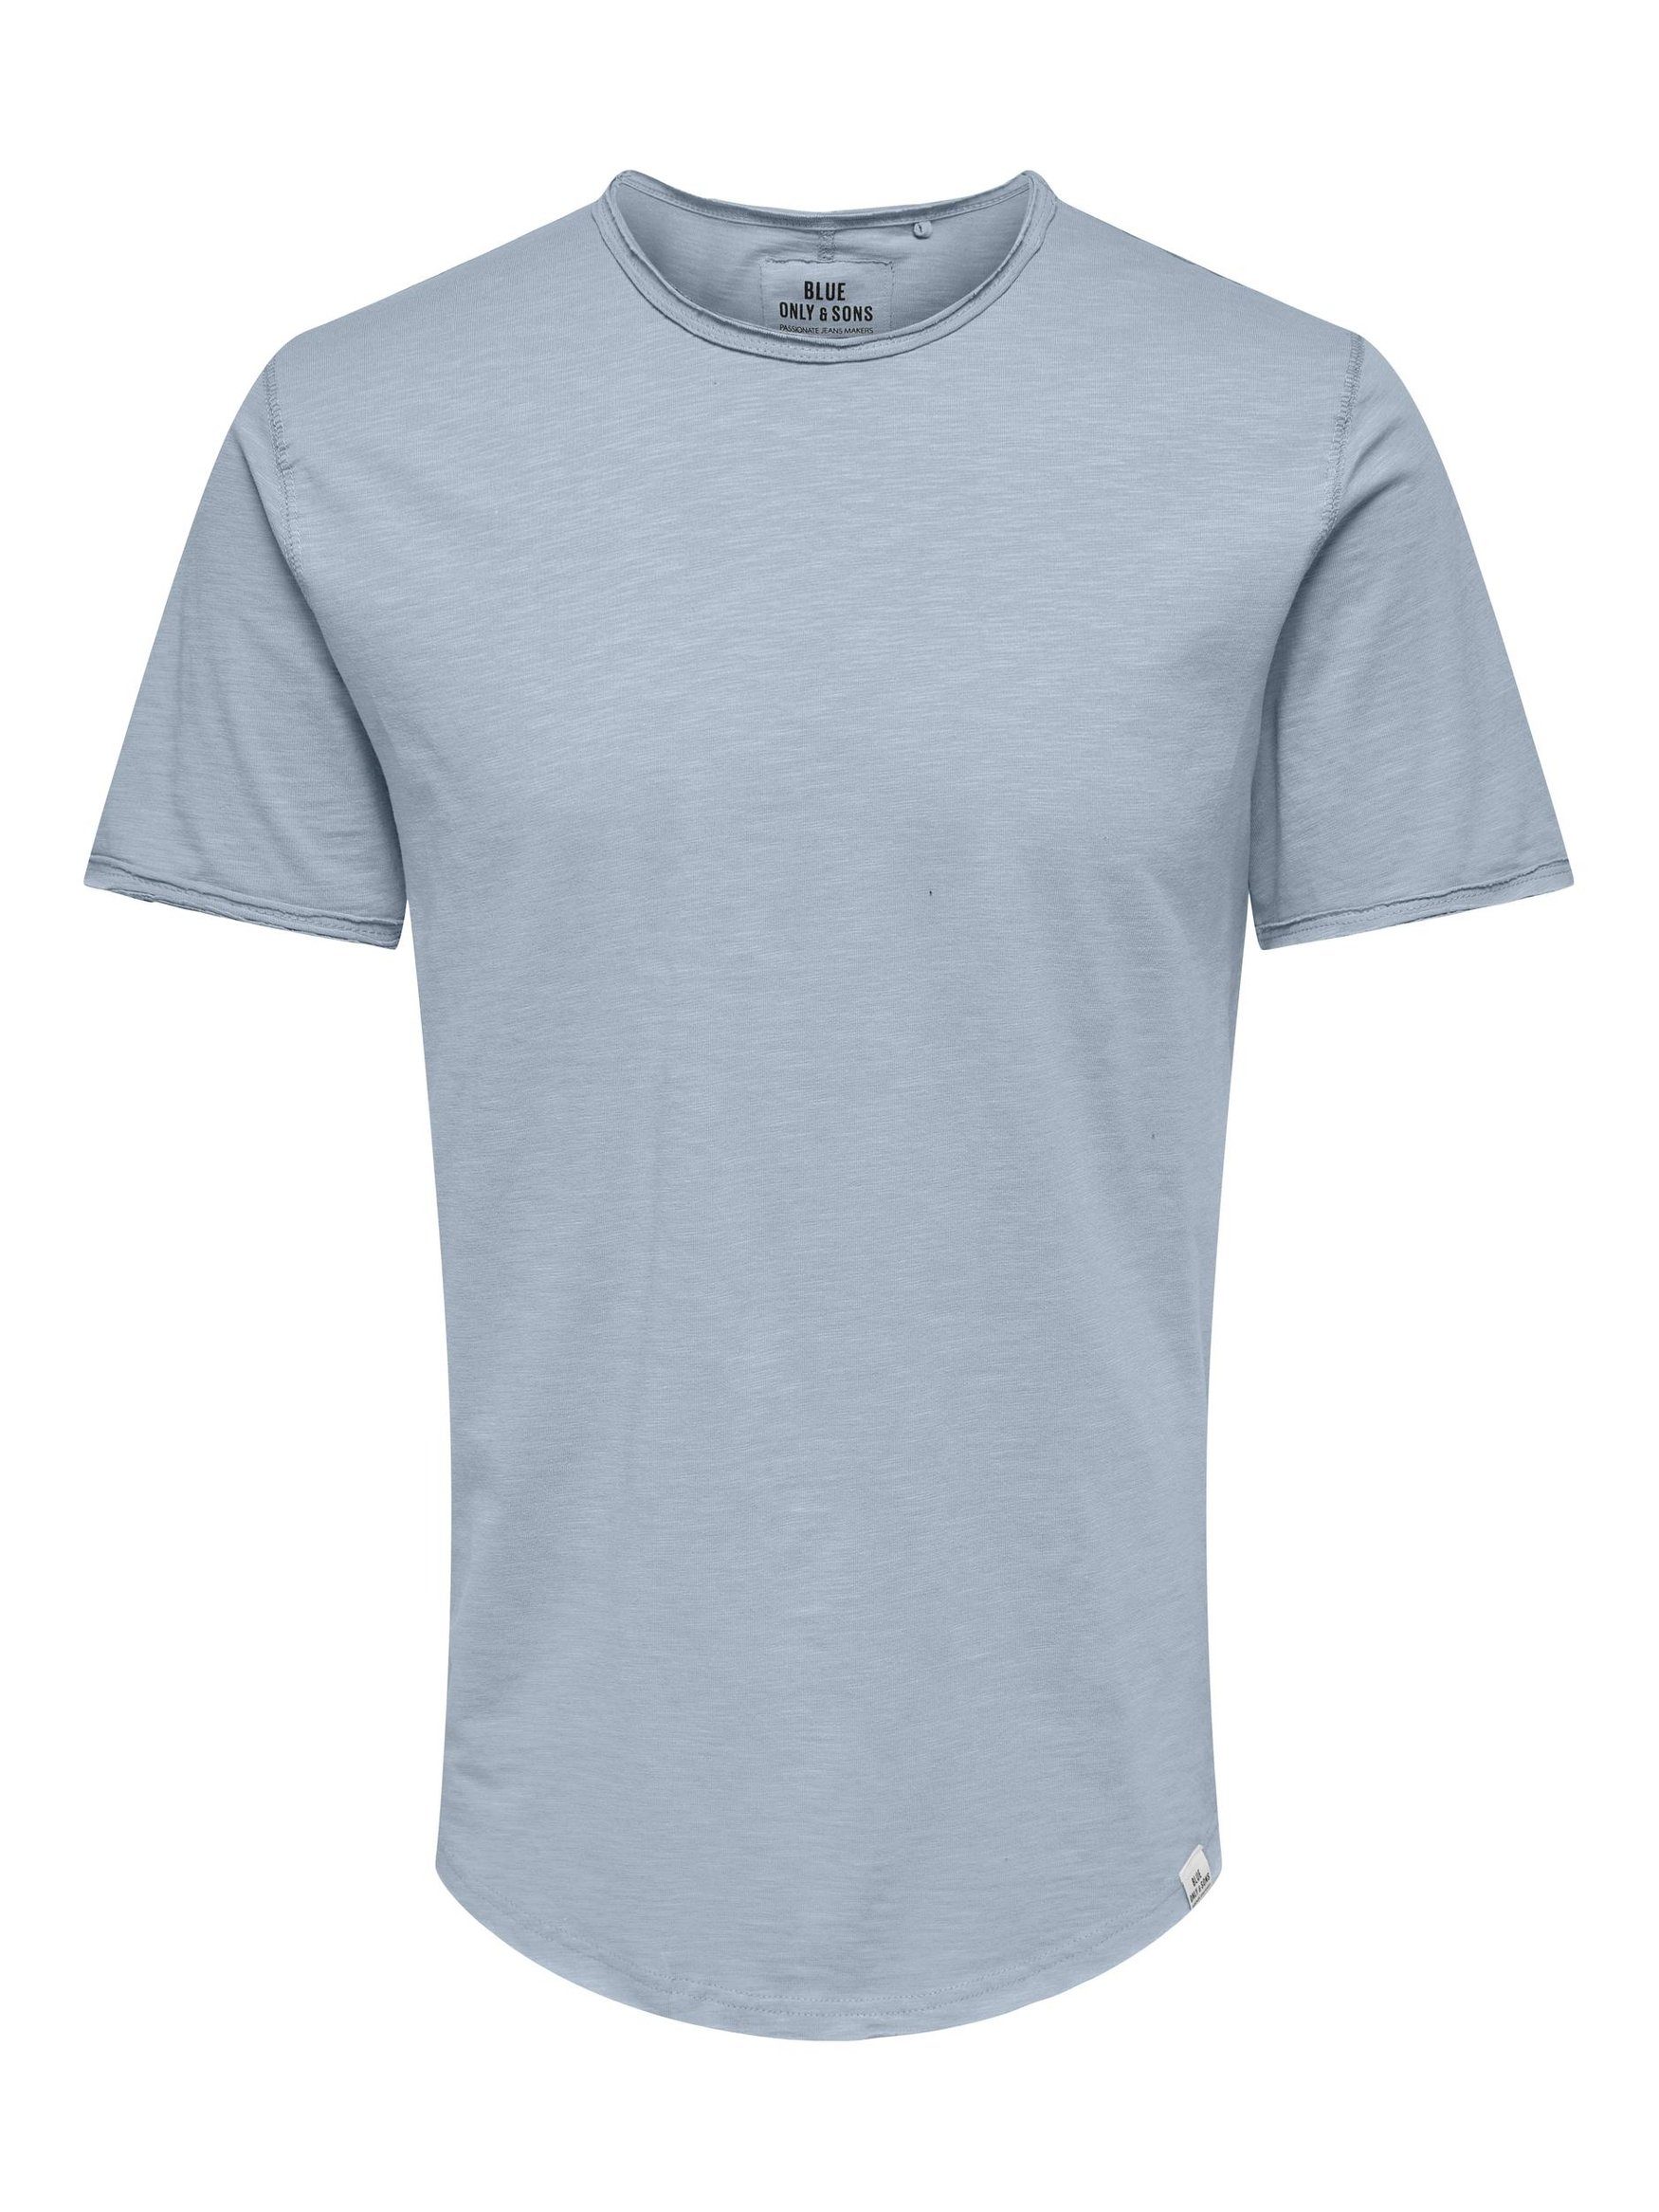 ONLY & SONS T-Shirt Langes Rundhals T-Shirt Einfarbiges Kurzarm Basic Shirt ONSBENNE 4783 in Hellblau